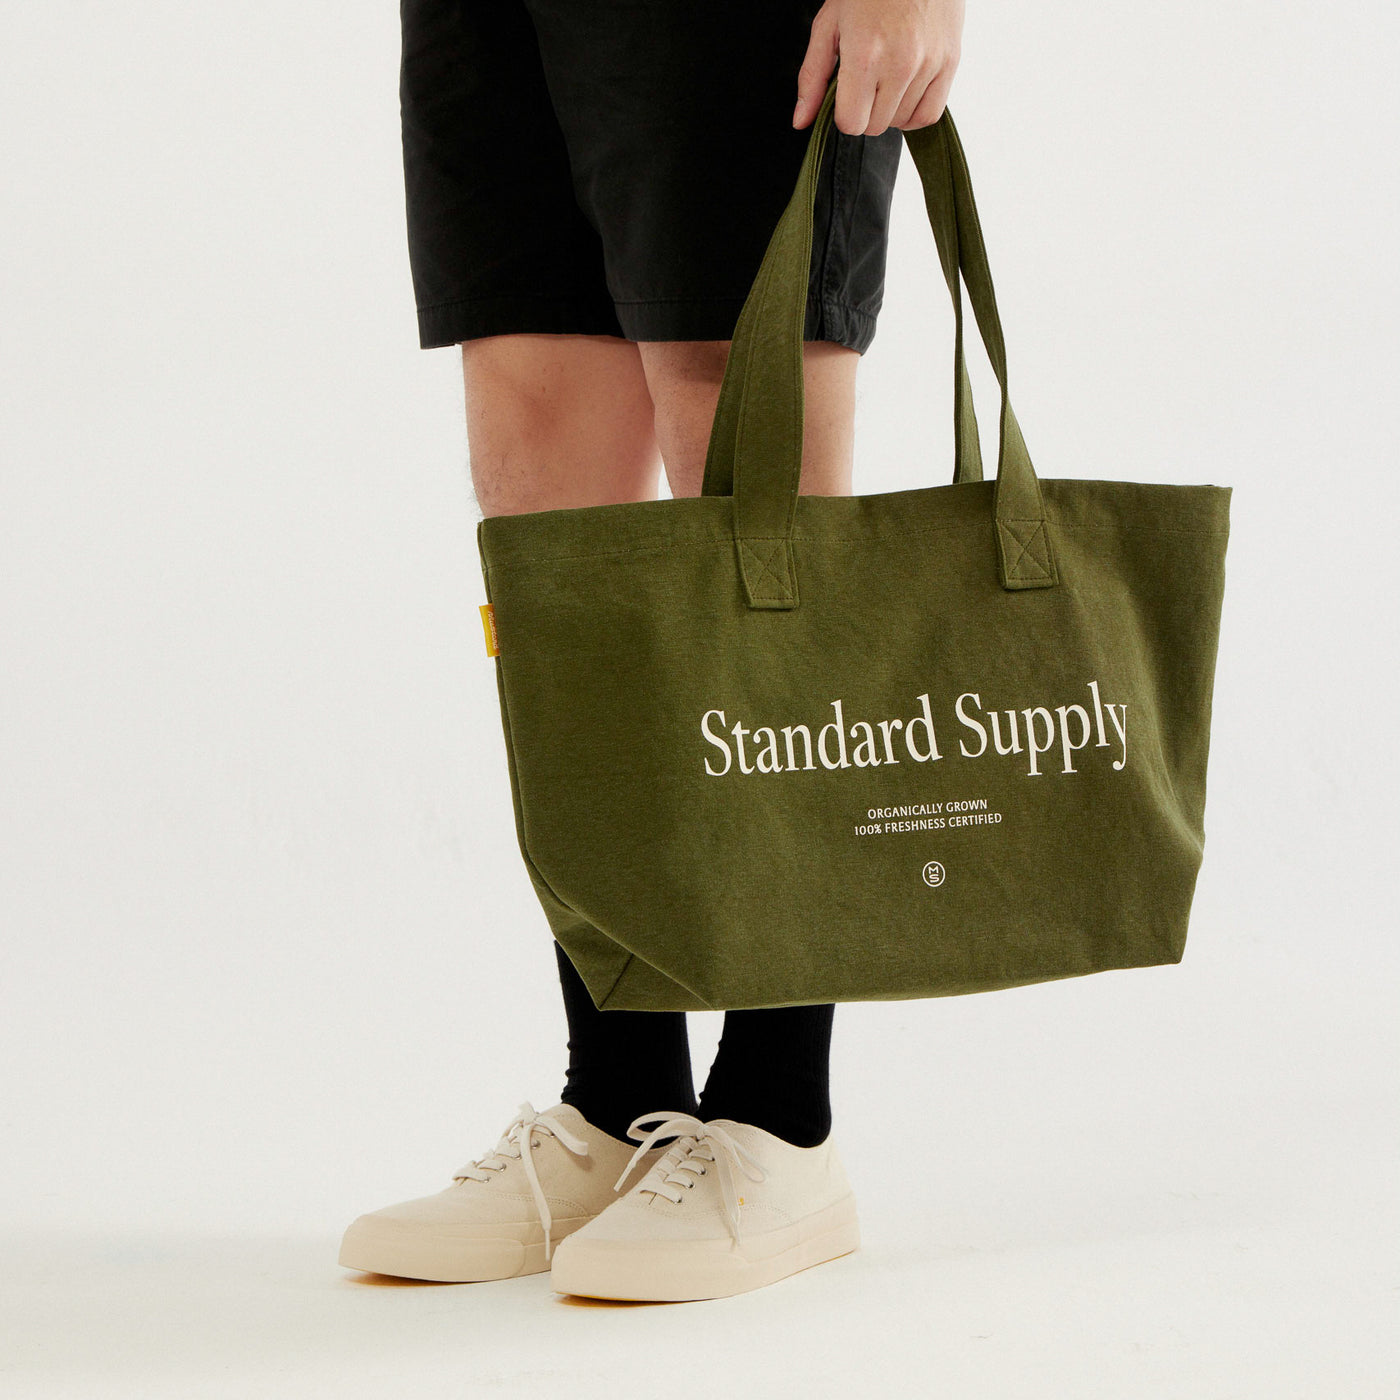 Standard Supply Market Tote - Olive